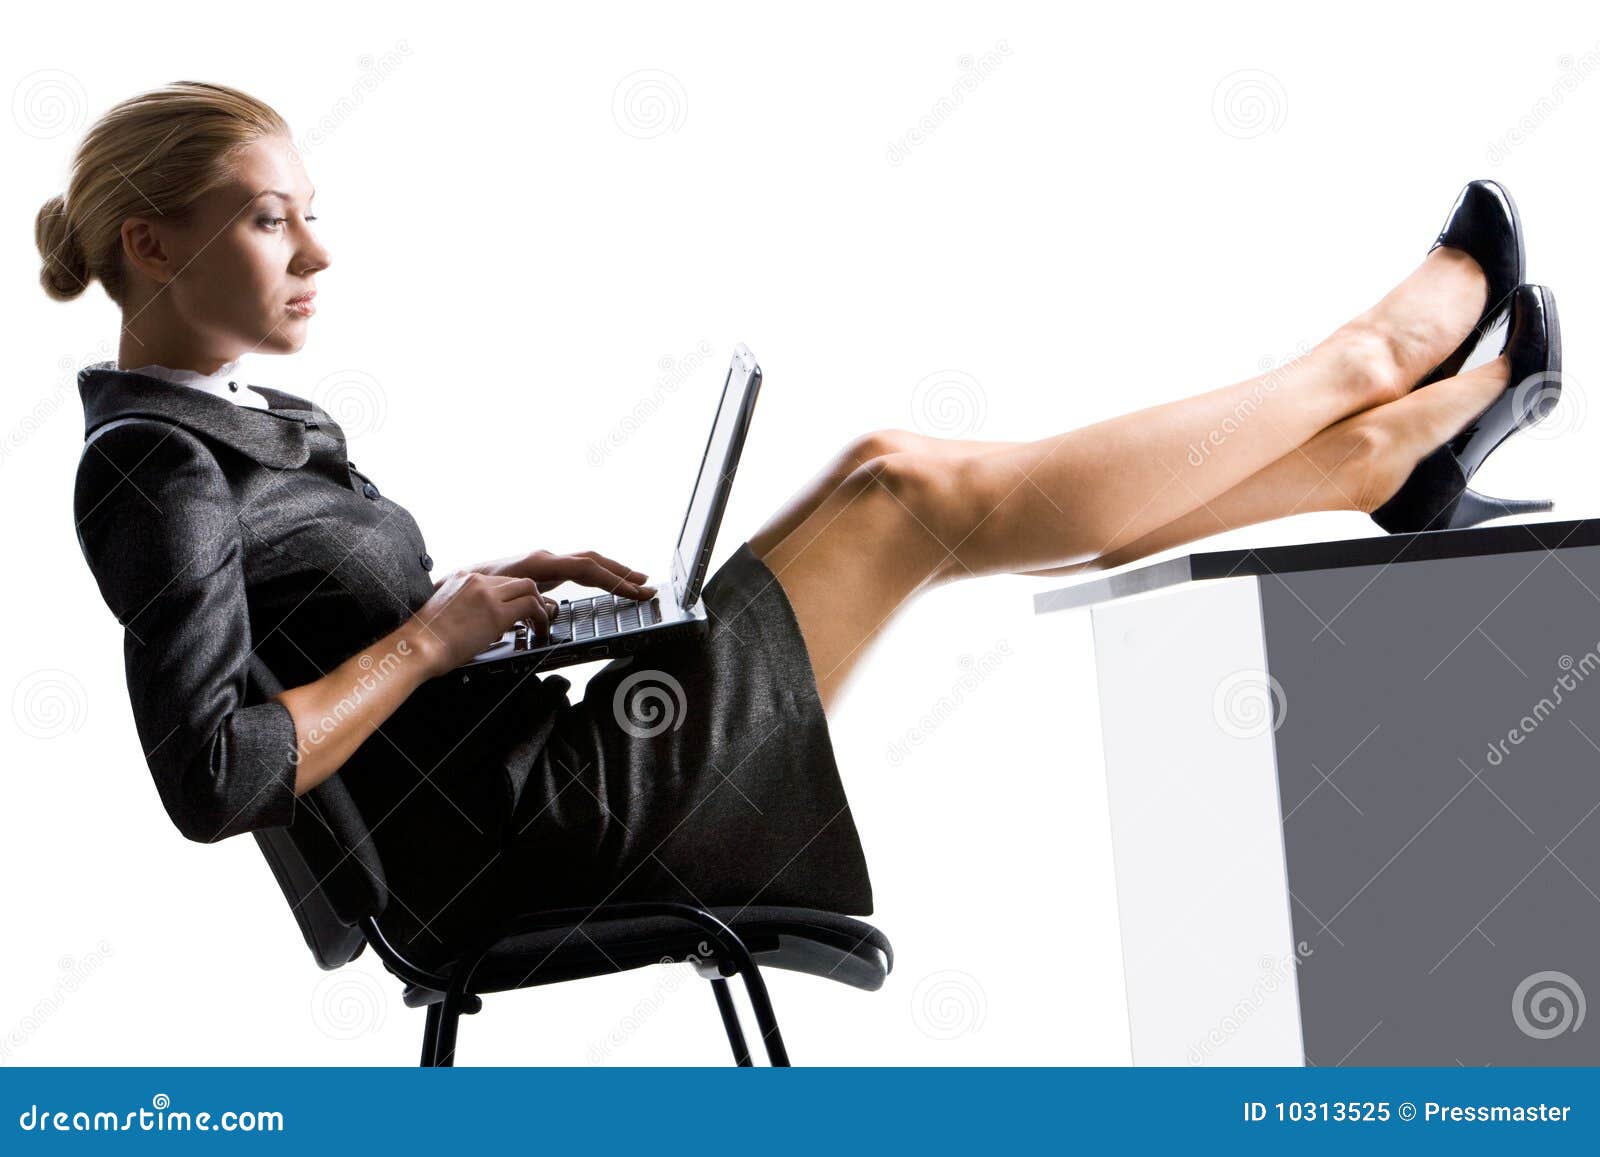 cage kribo recommends crossed legs under desk secretary pic